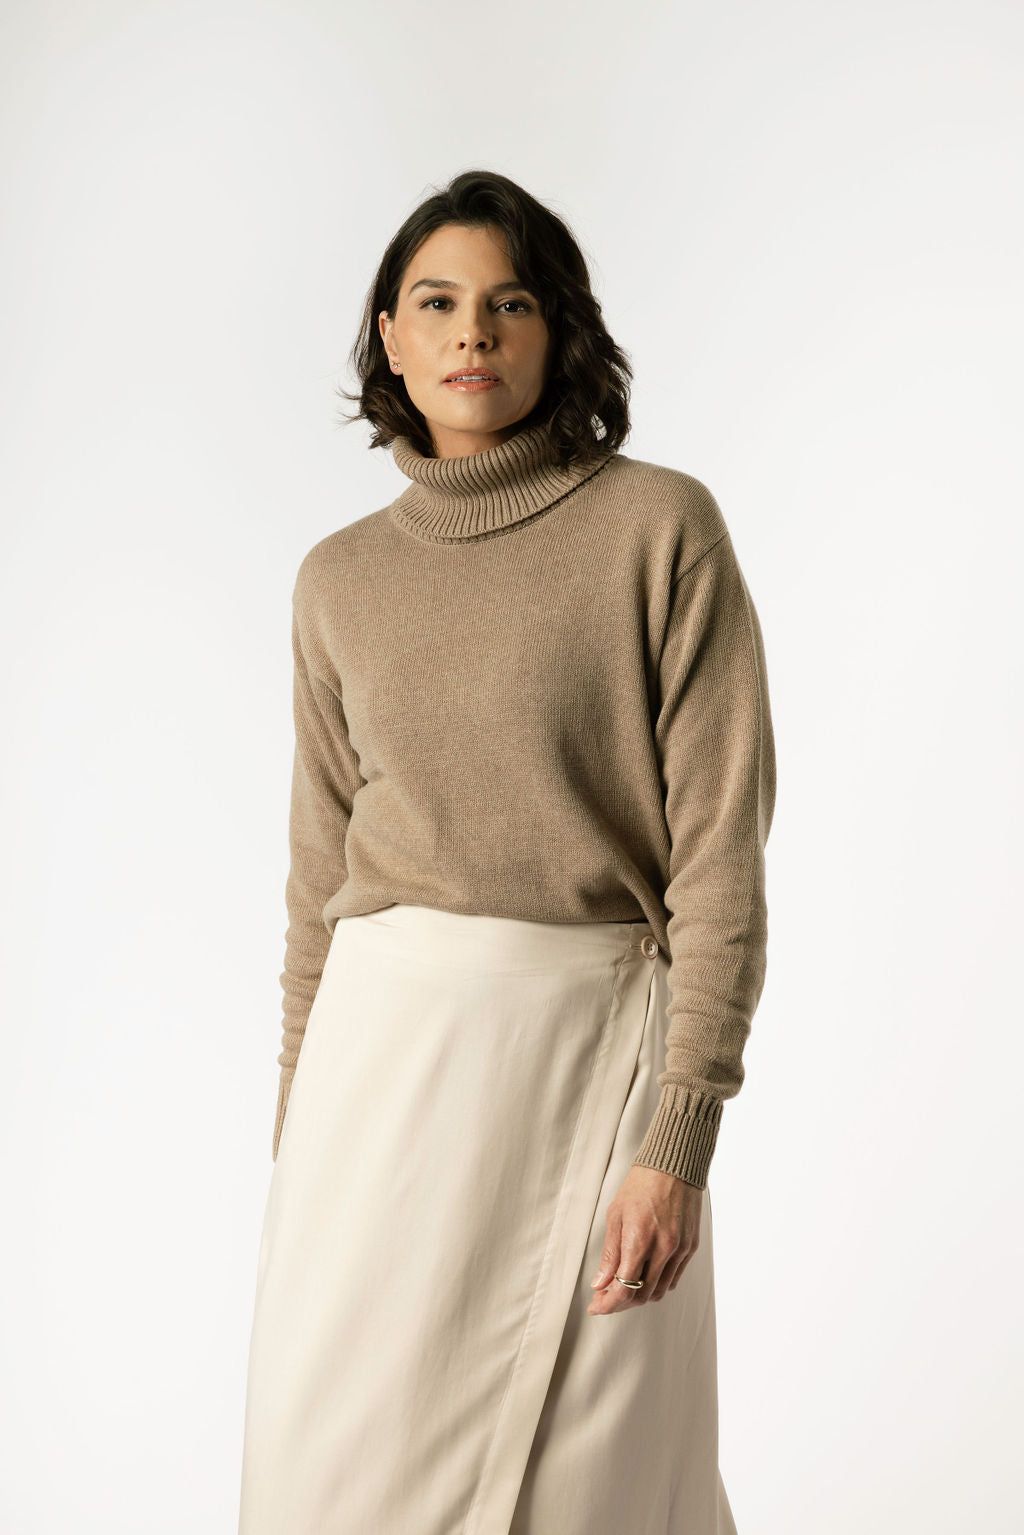 Minimalist Capsule Wardrobe for Work Cream Skirt Paired with Sweater